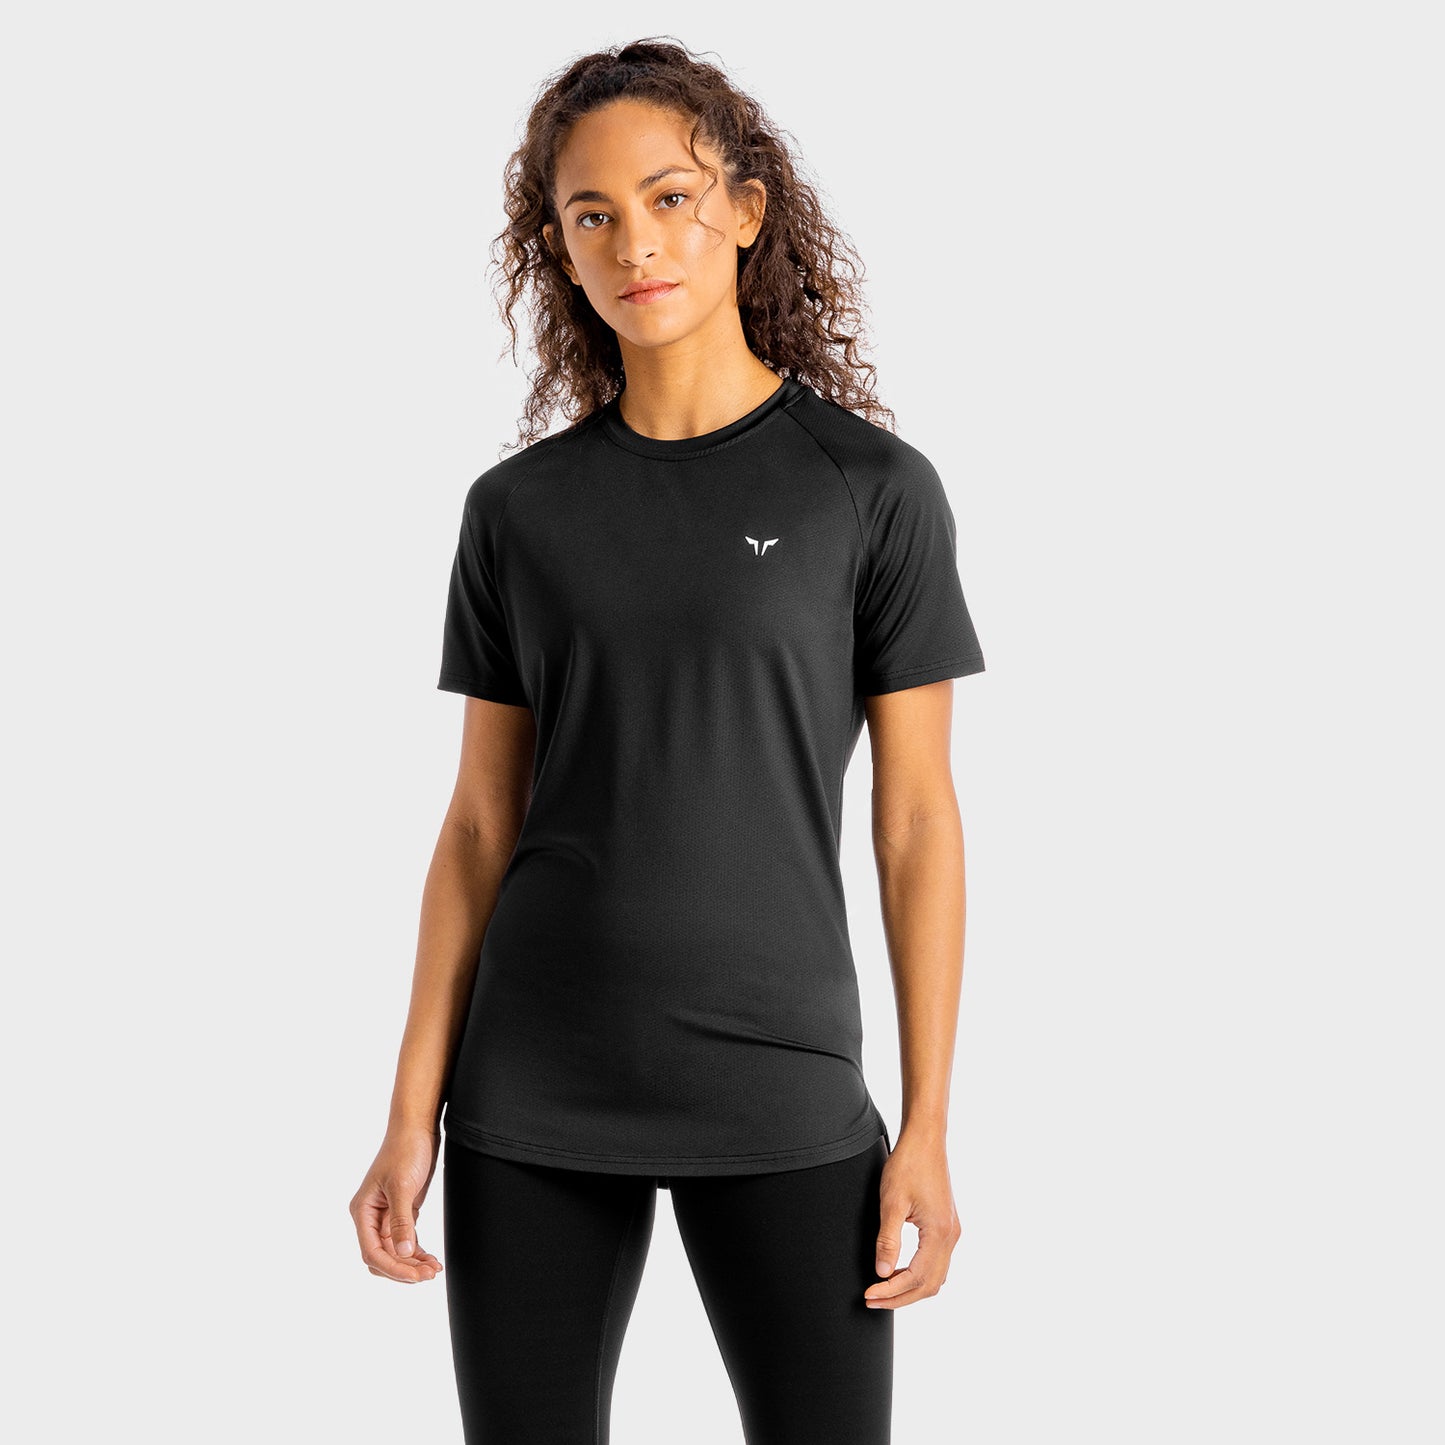 Nike Sportswear Dry Versa Mesh Back Training Top Women Size Medium Black